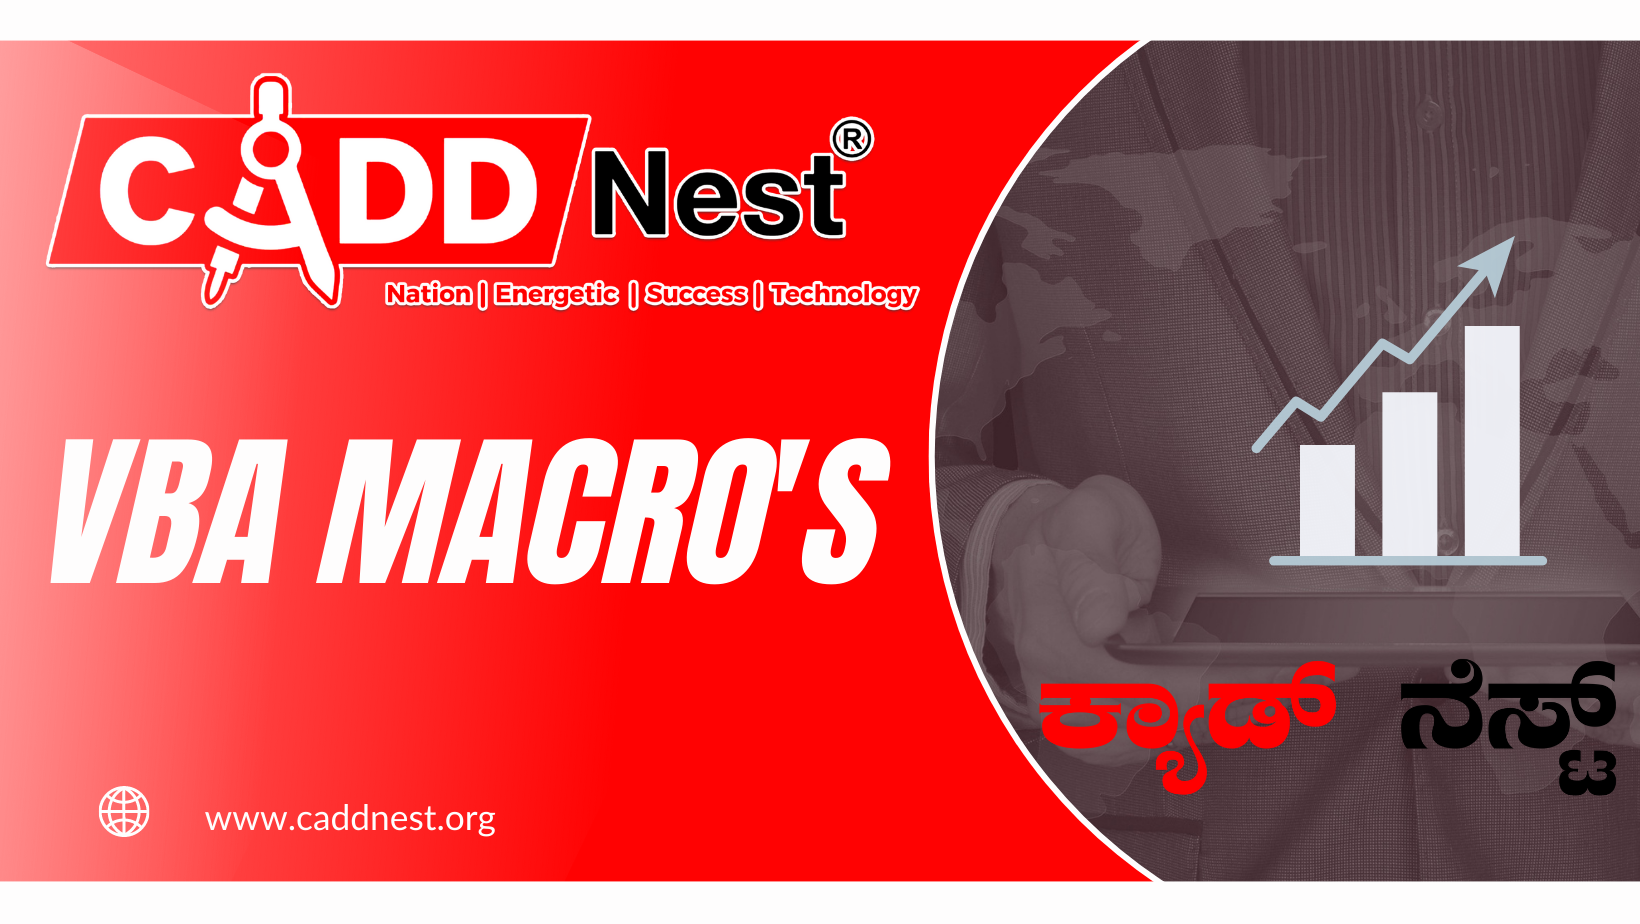 CADD NEST (P) Ltd., - Service - VBA Macro's